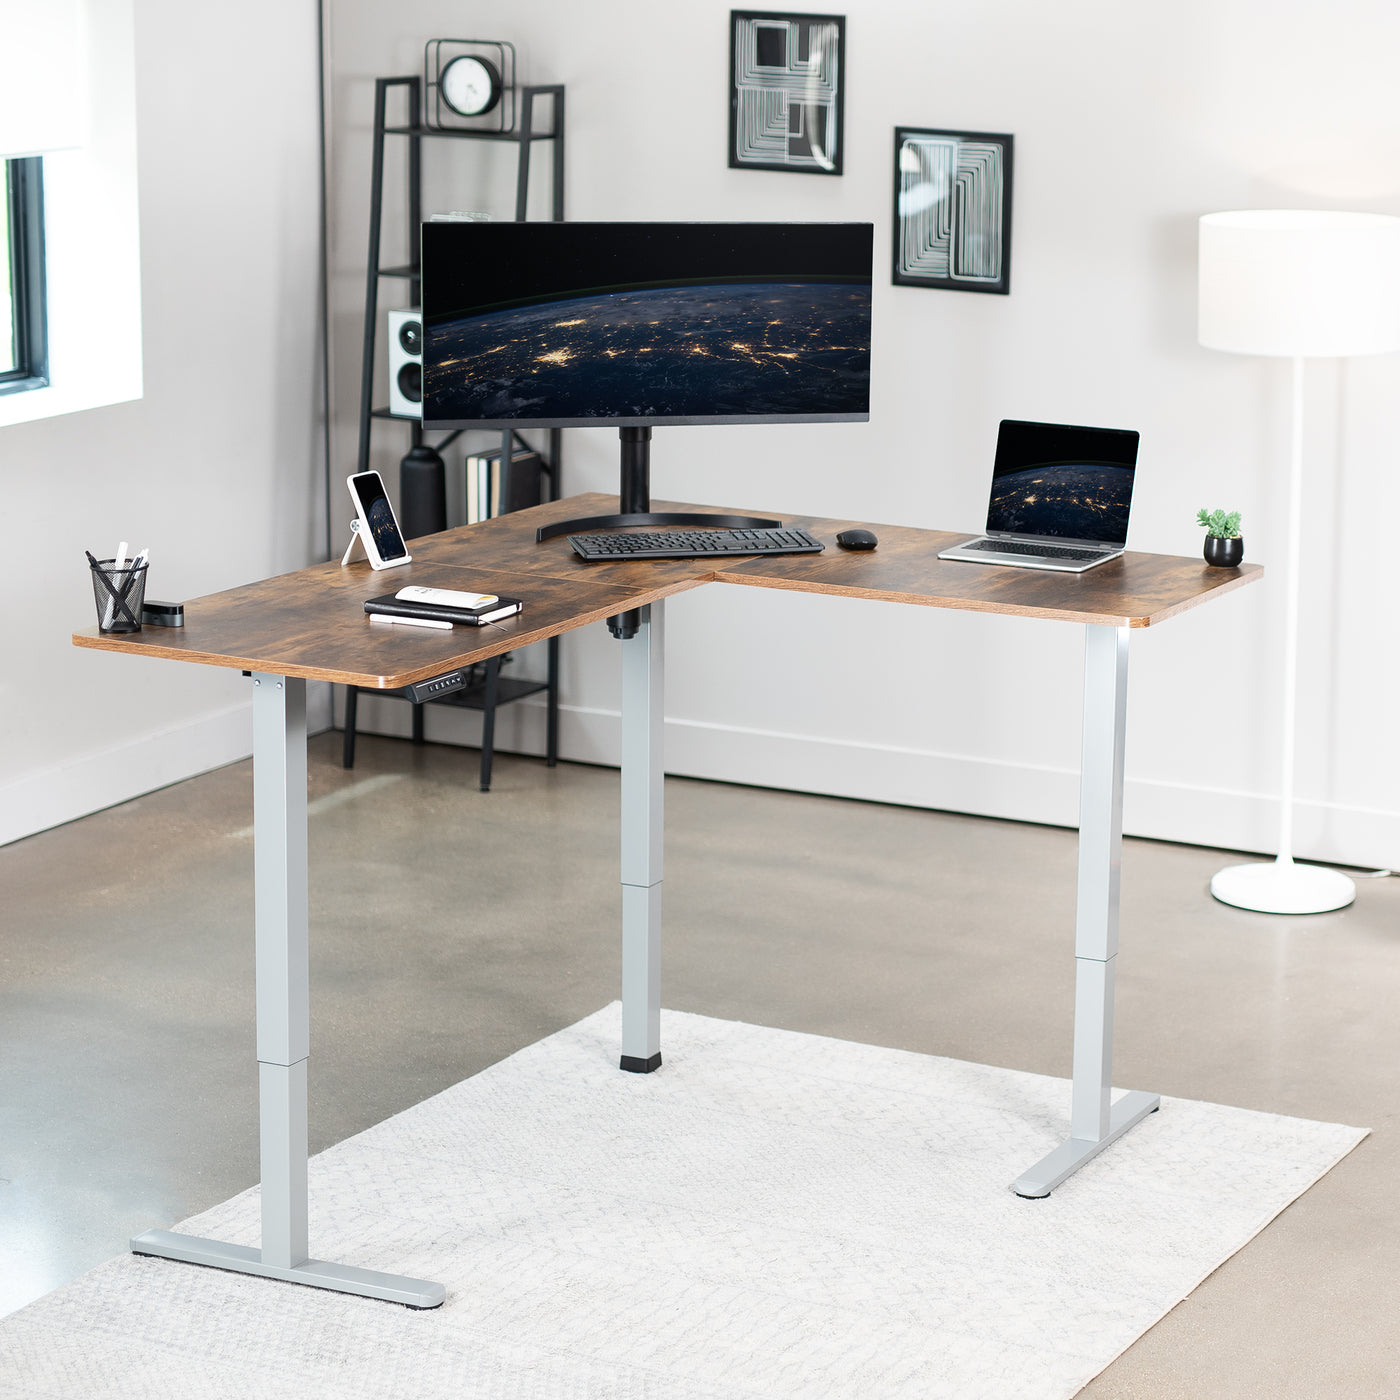 Rustic electric heavy-duty corner desk workstation for modern office workspaces. 